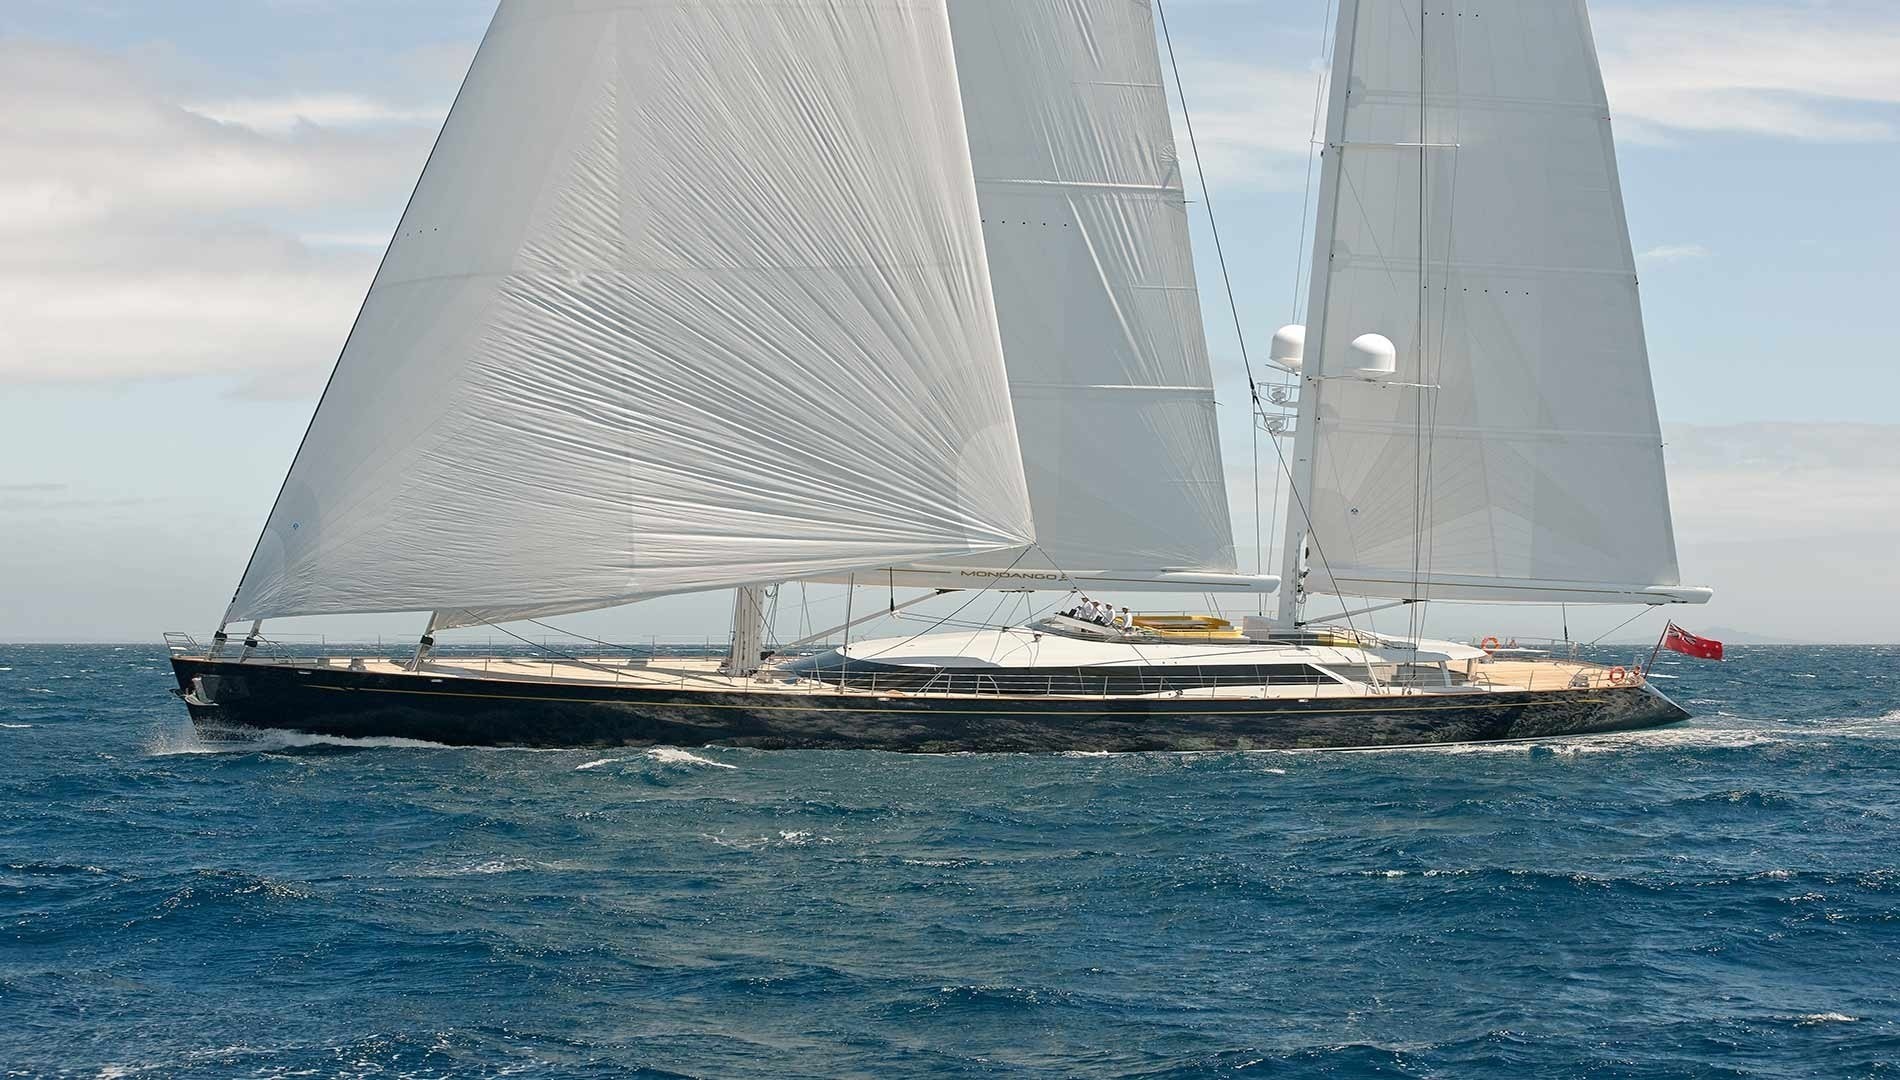 The 56m Yacht MONDANGO 3